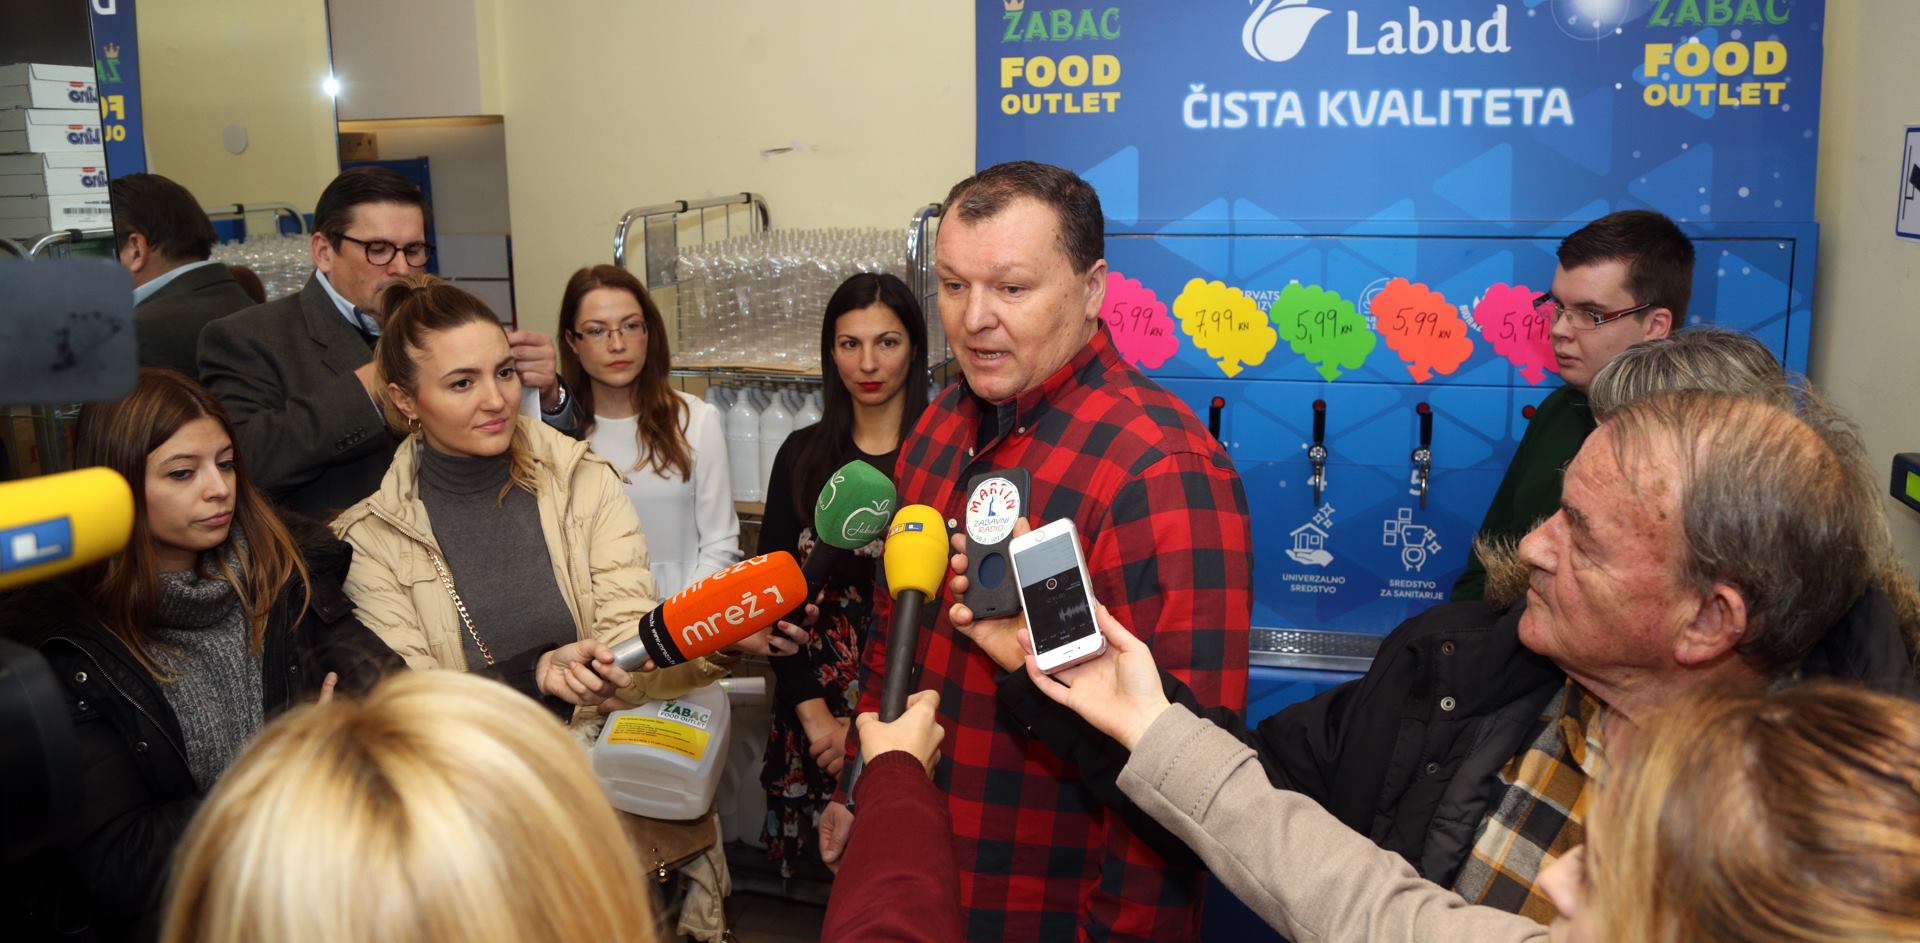 FOTO: FOOD OUTLET ŽABAC Hrvatski aparat s Labud deterdžentima u rinfuzi